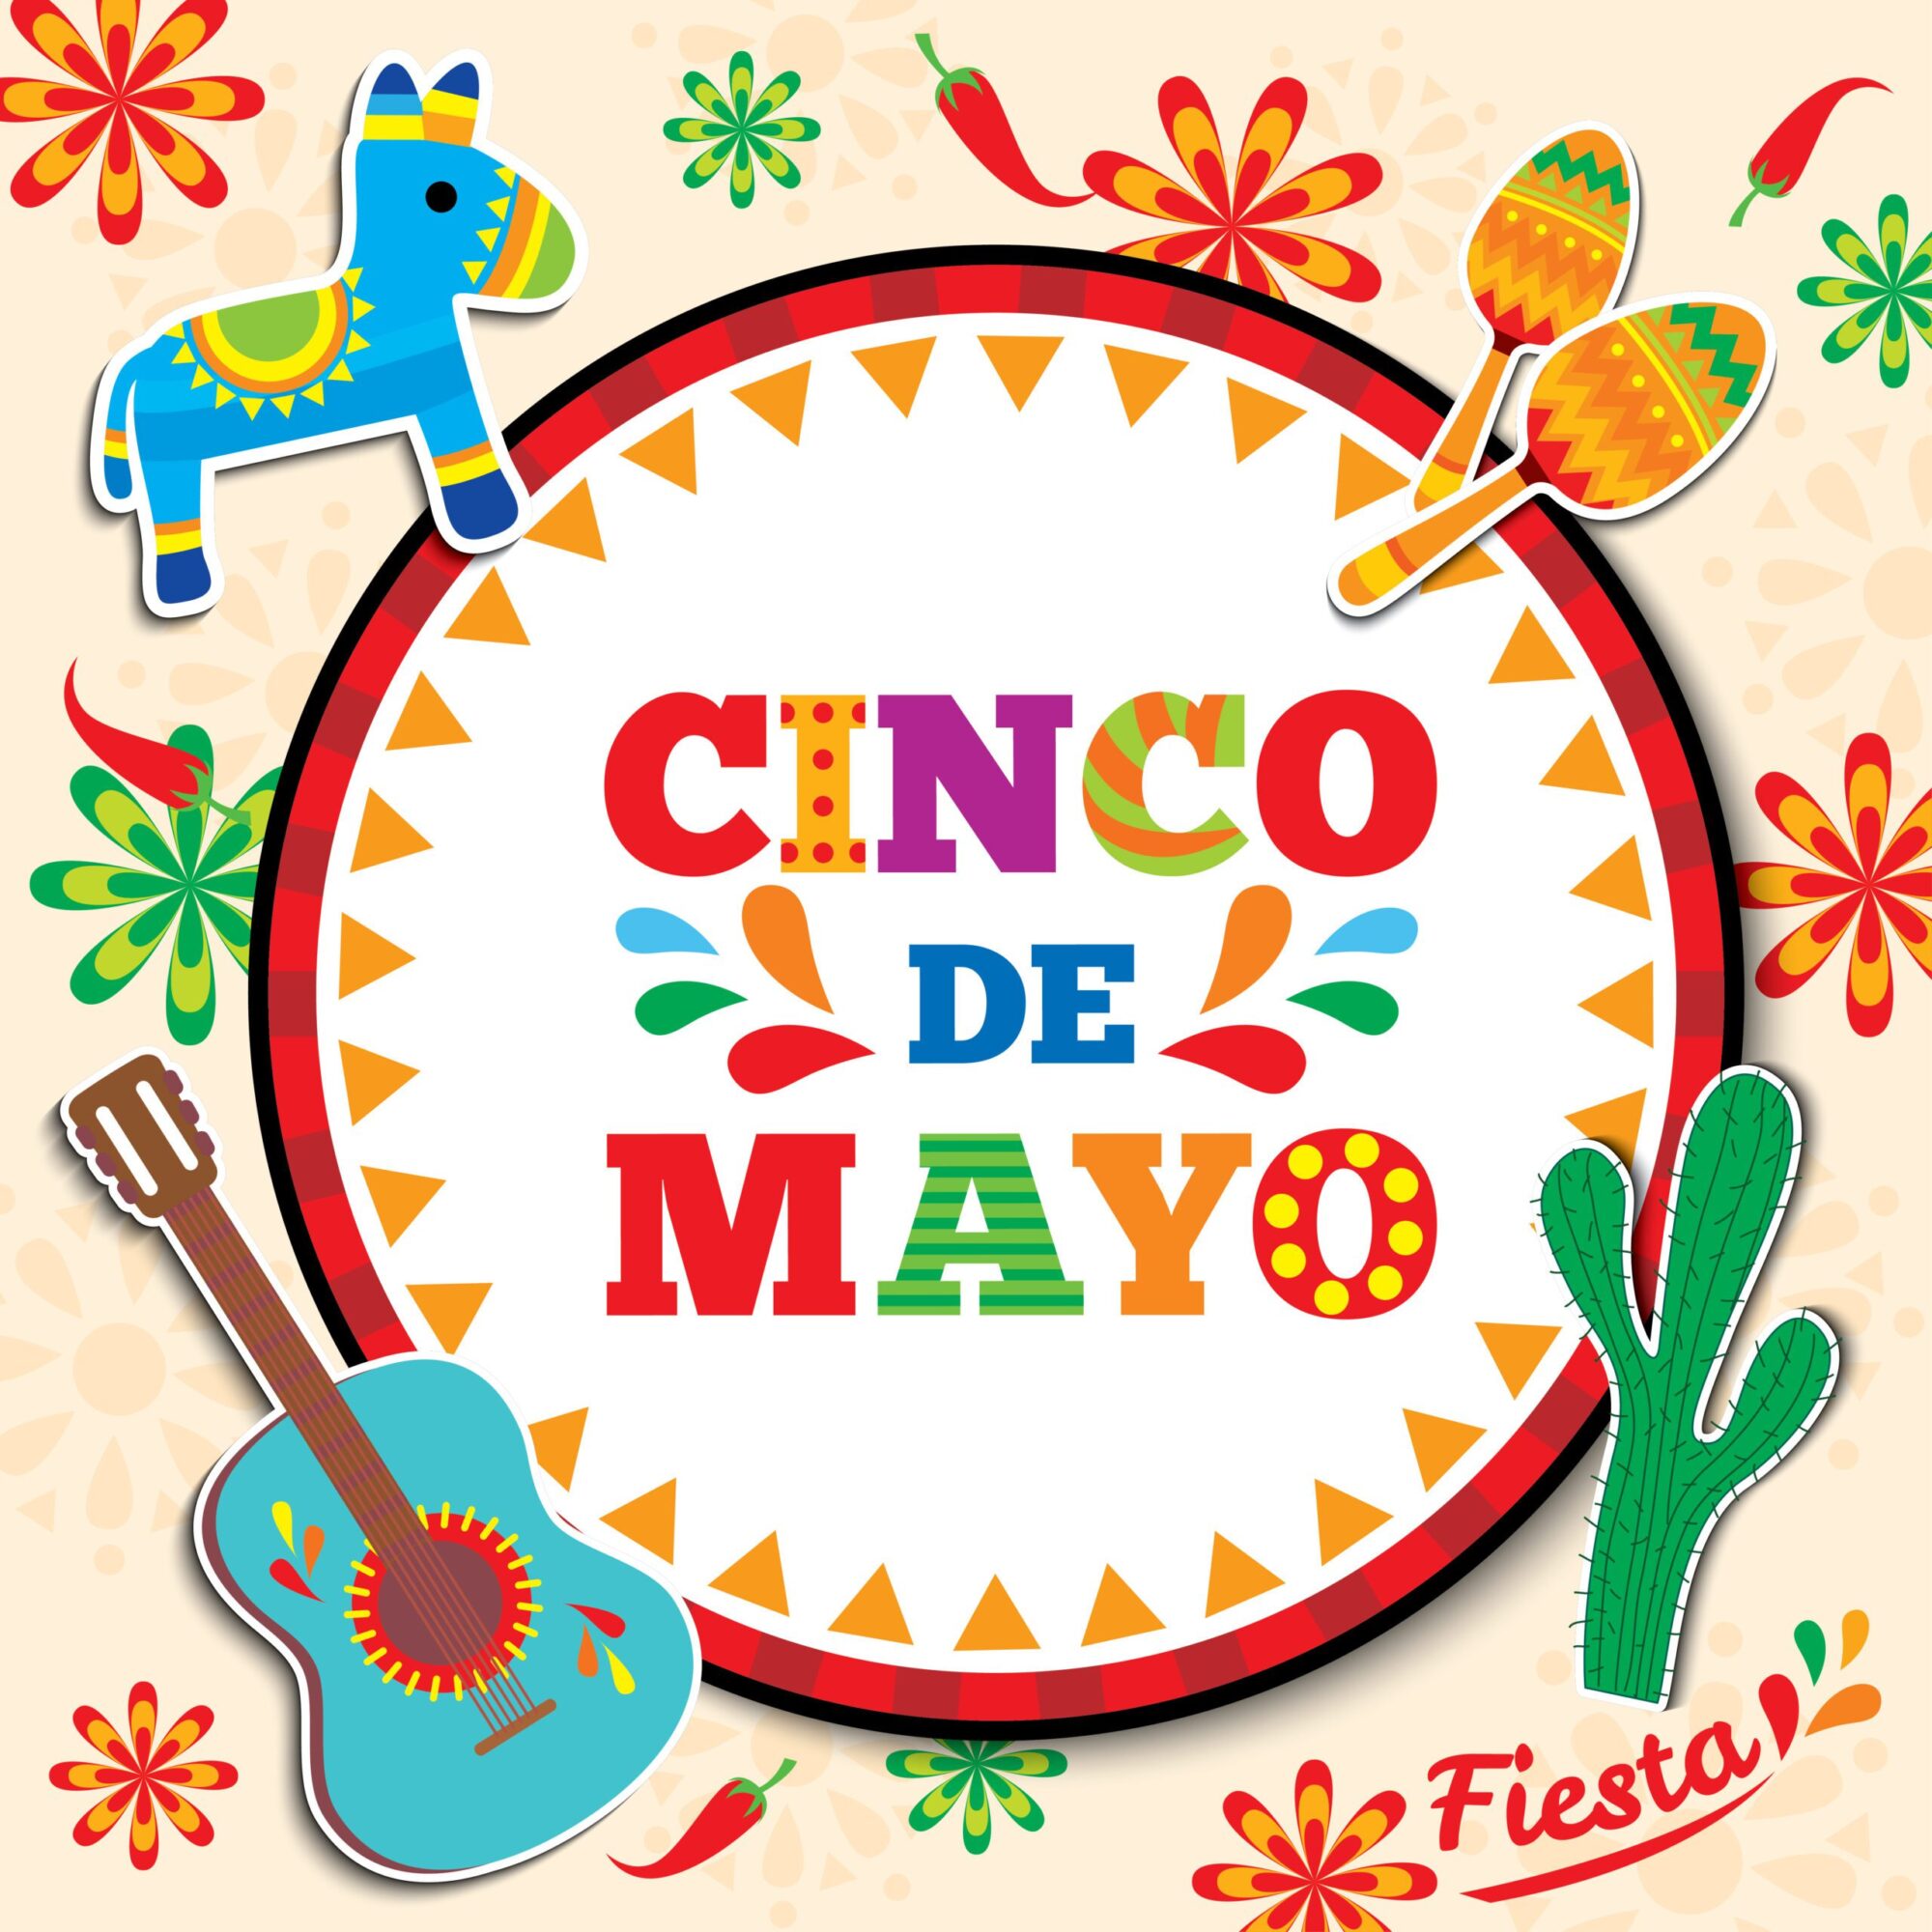 Cinco de Mayo sign with guitar, pinata, cactus and maracas